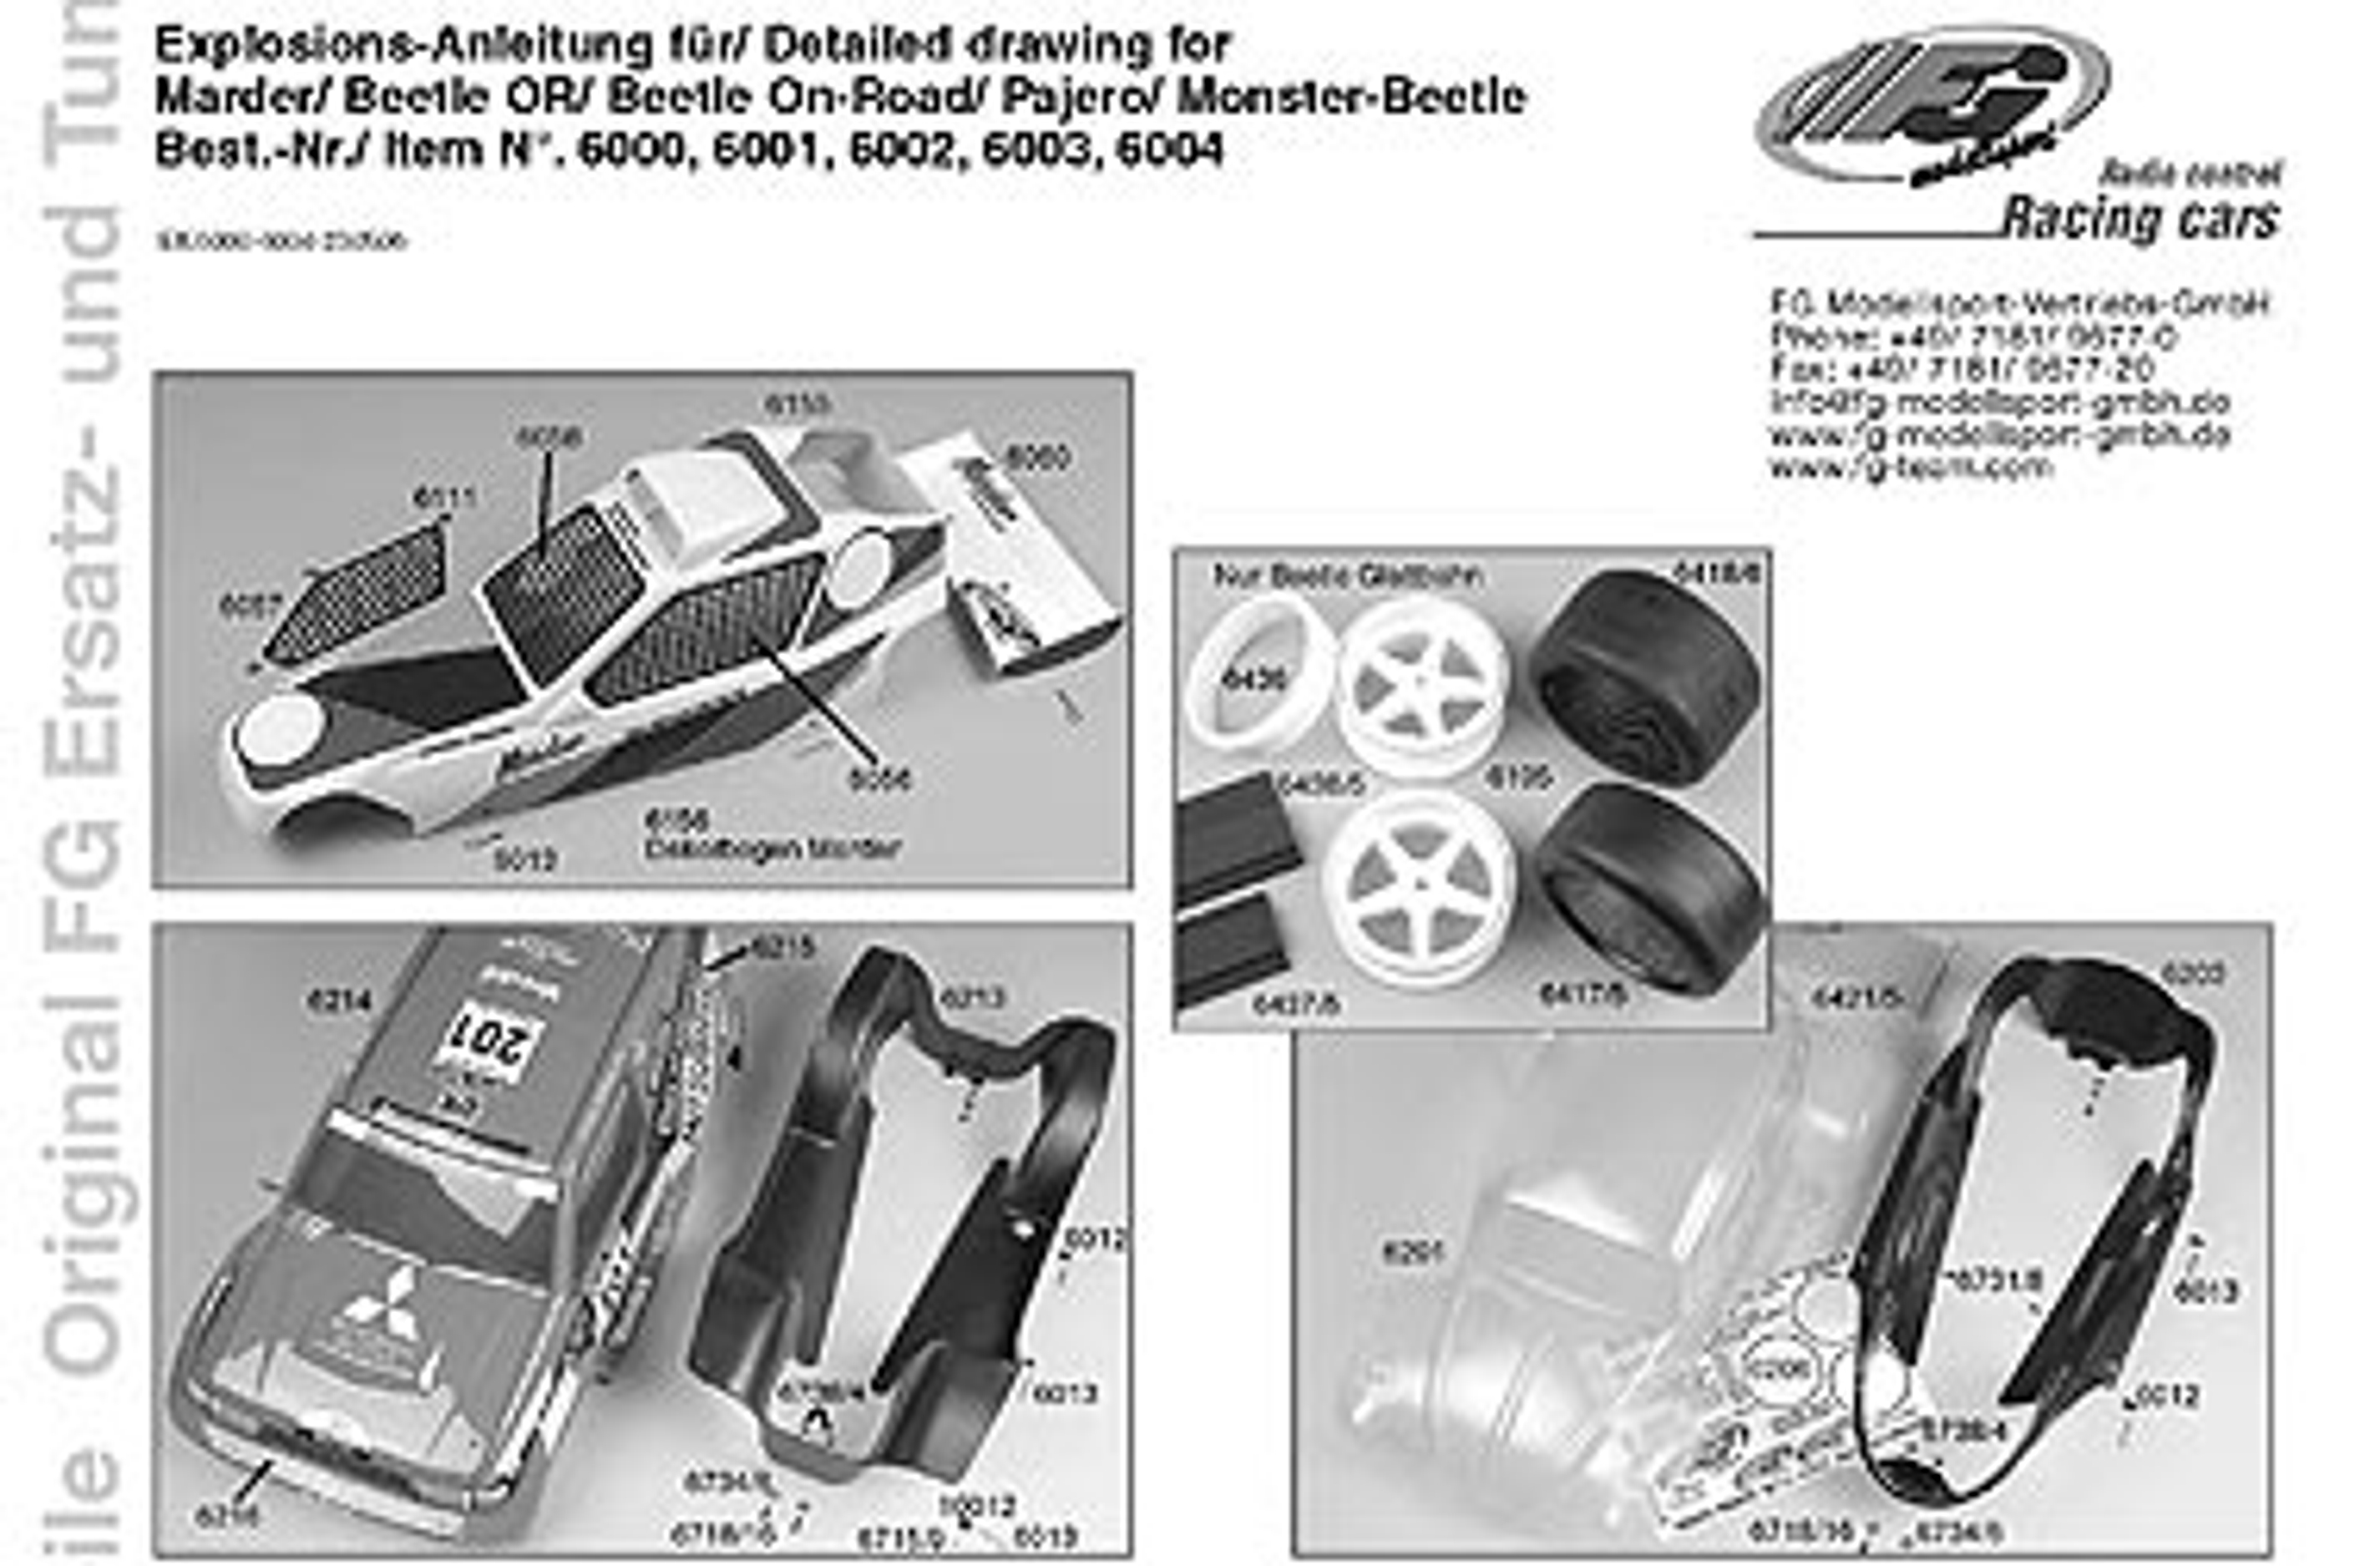 y0959 FG Anleitungsset 2WD Marder / Beetle OR / Beetle On-Road / Monster Beetle, Set